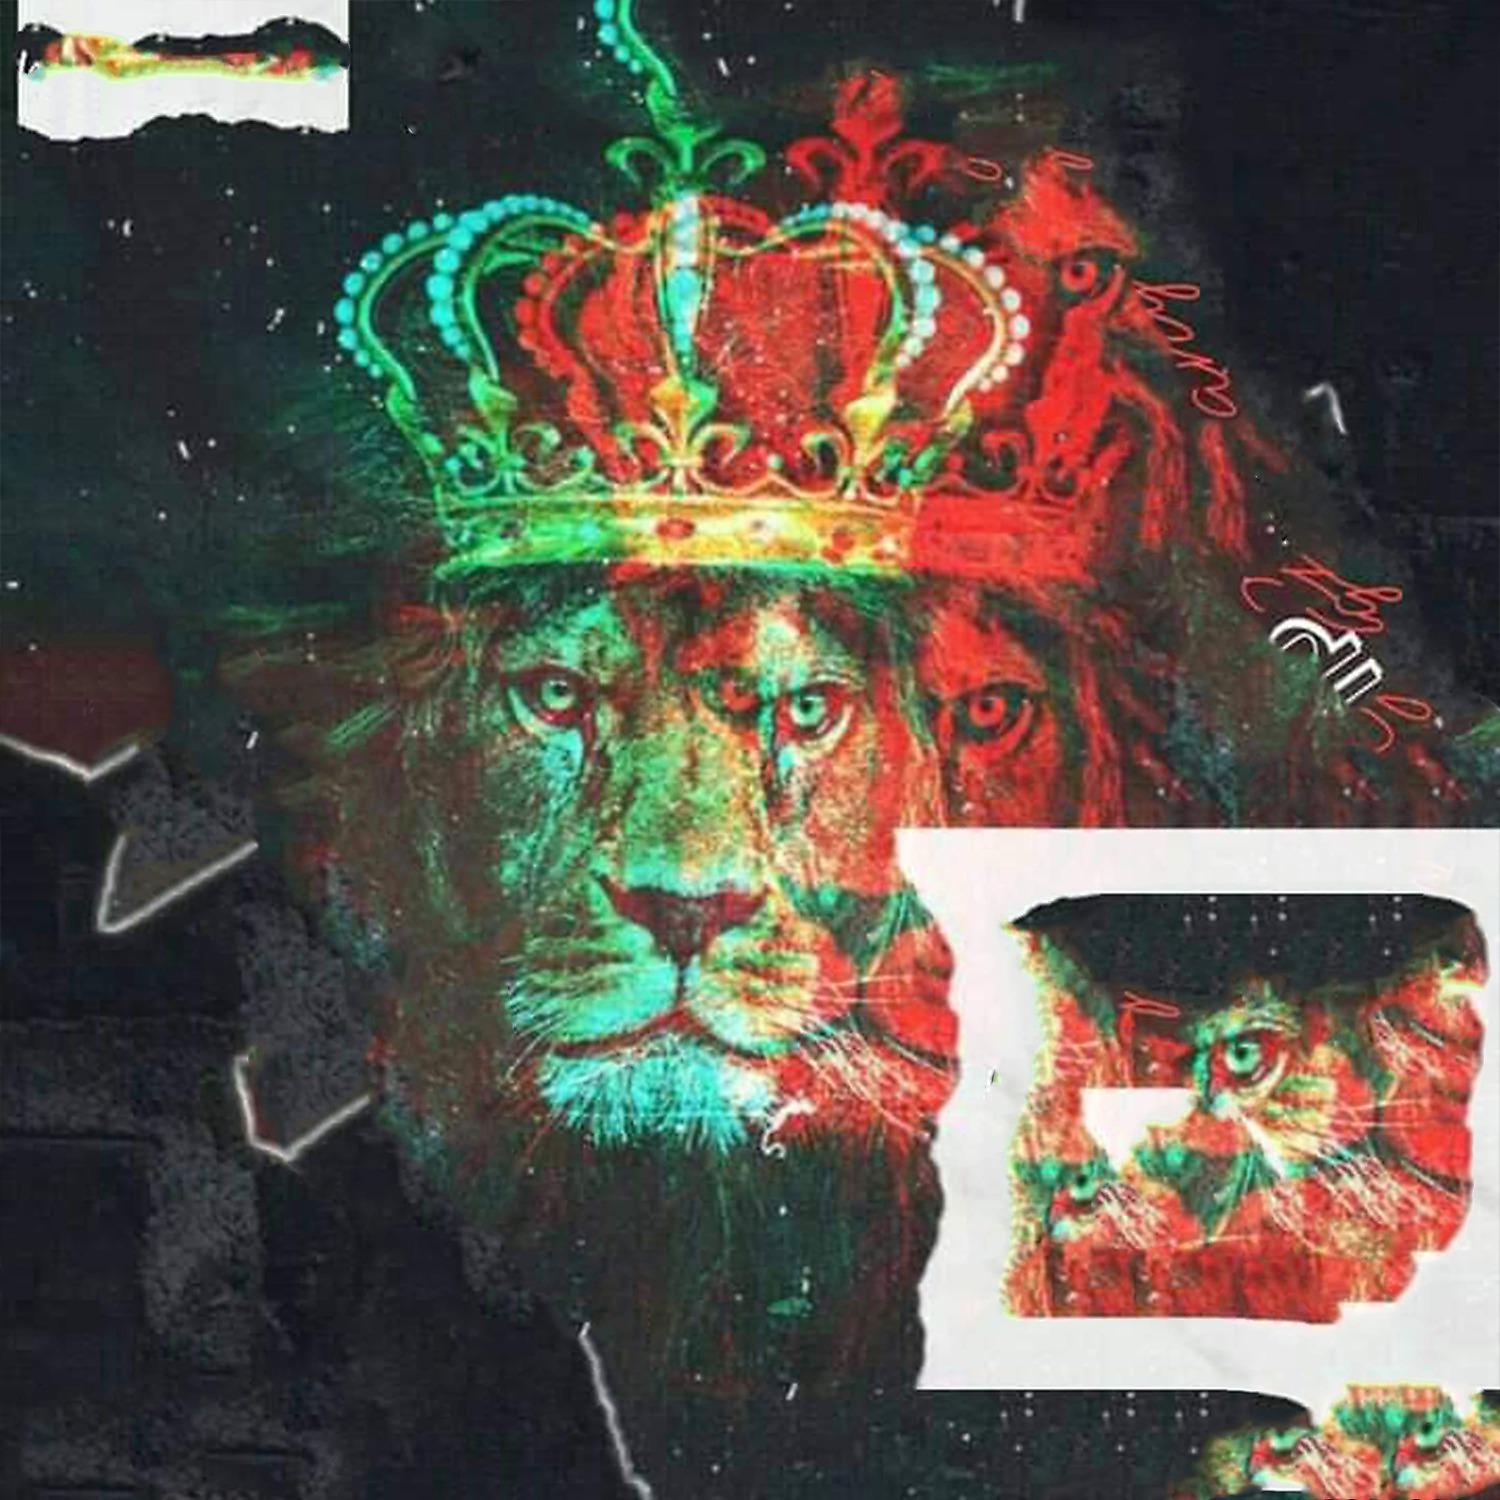 Постер альбома King of Trap